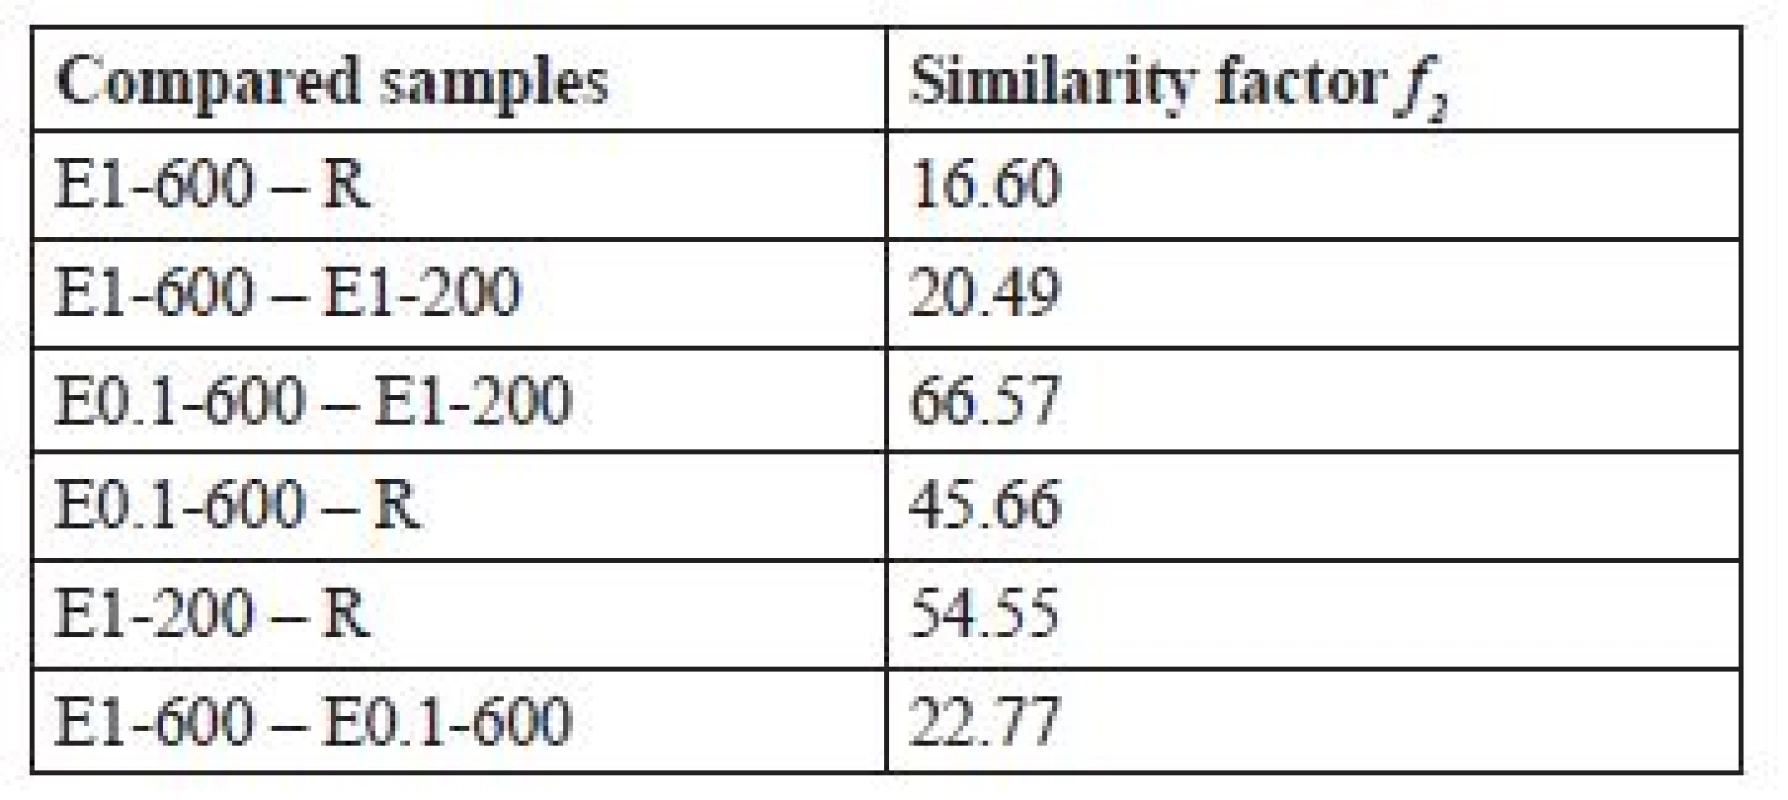 Similarity factor analysis